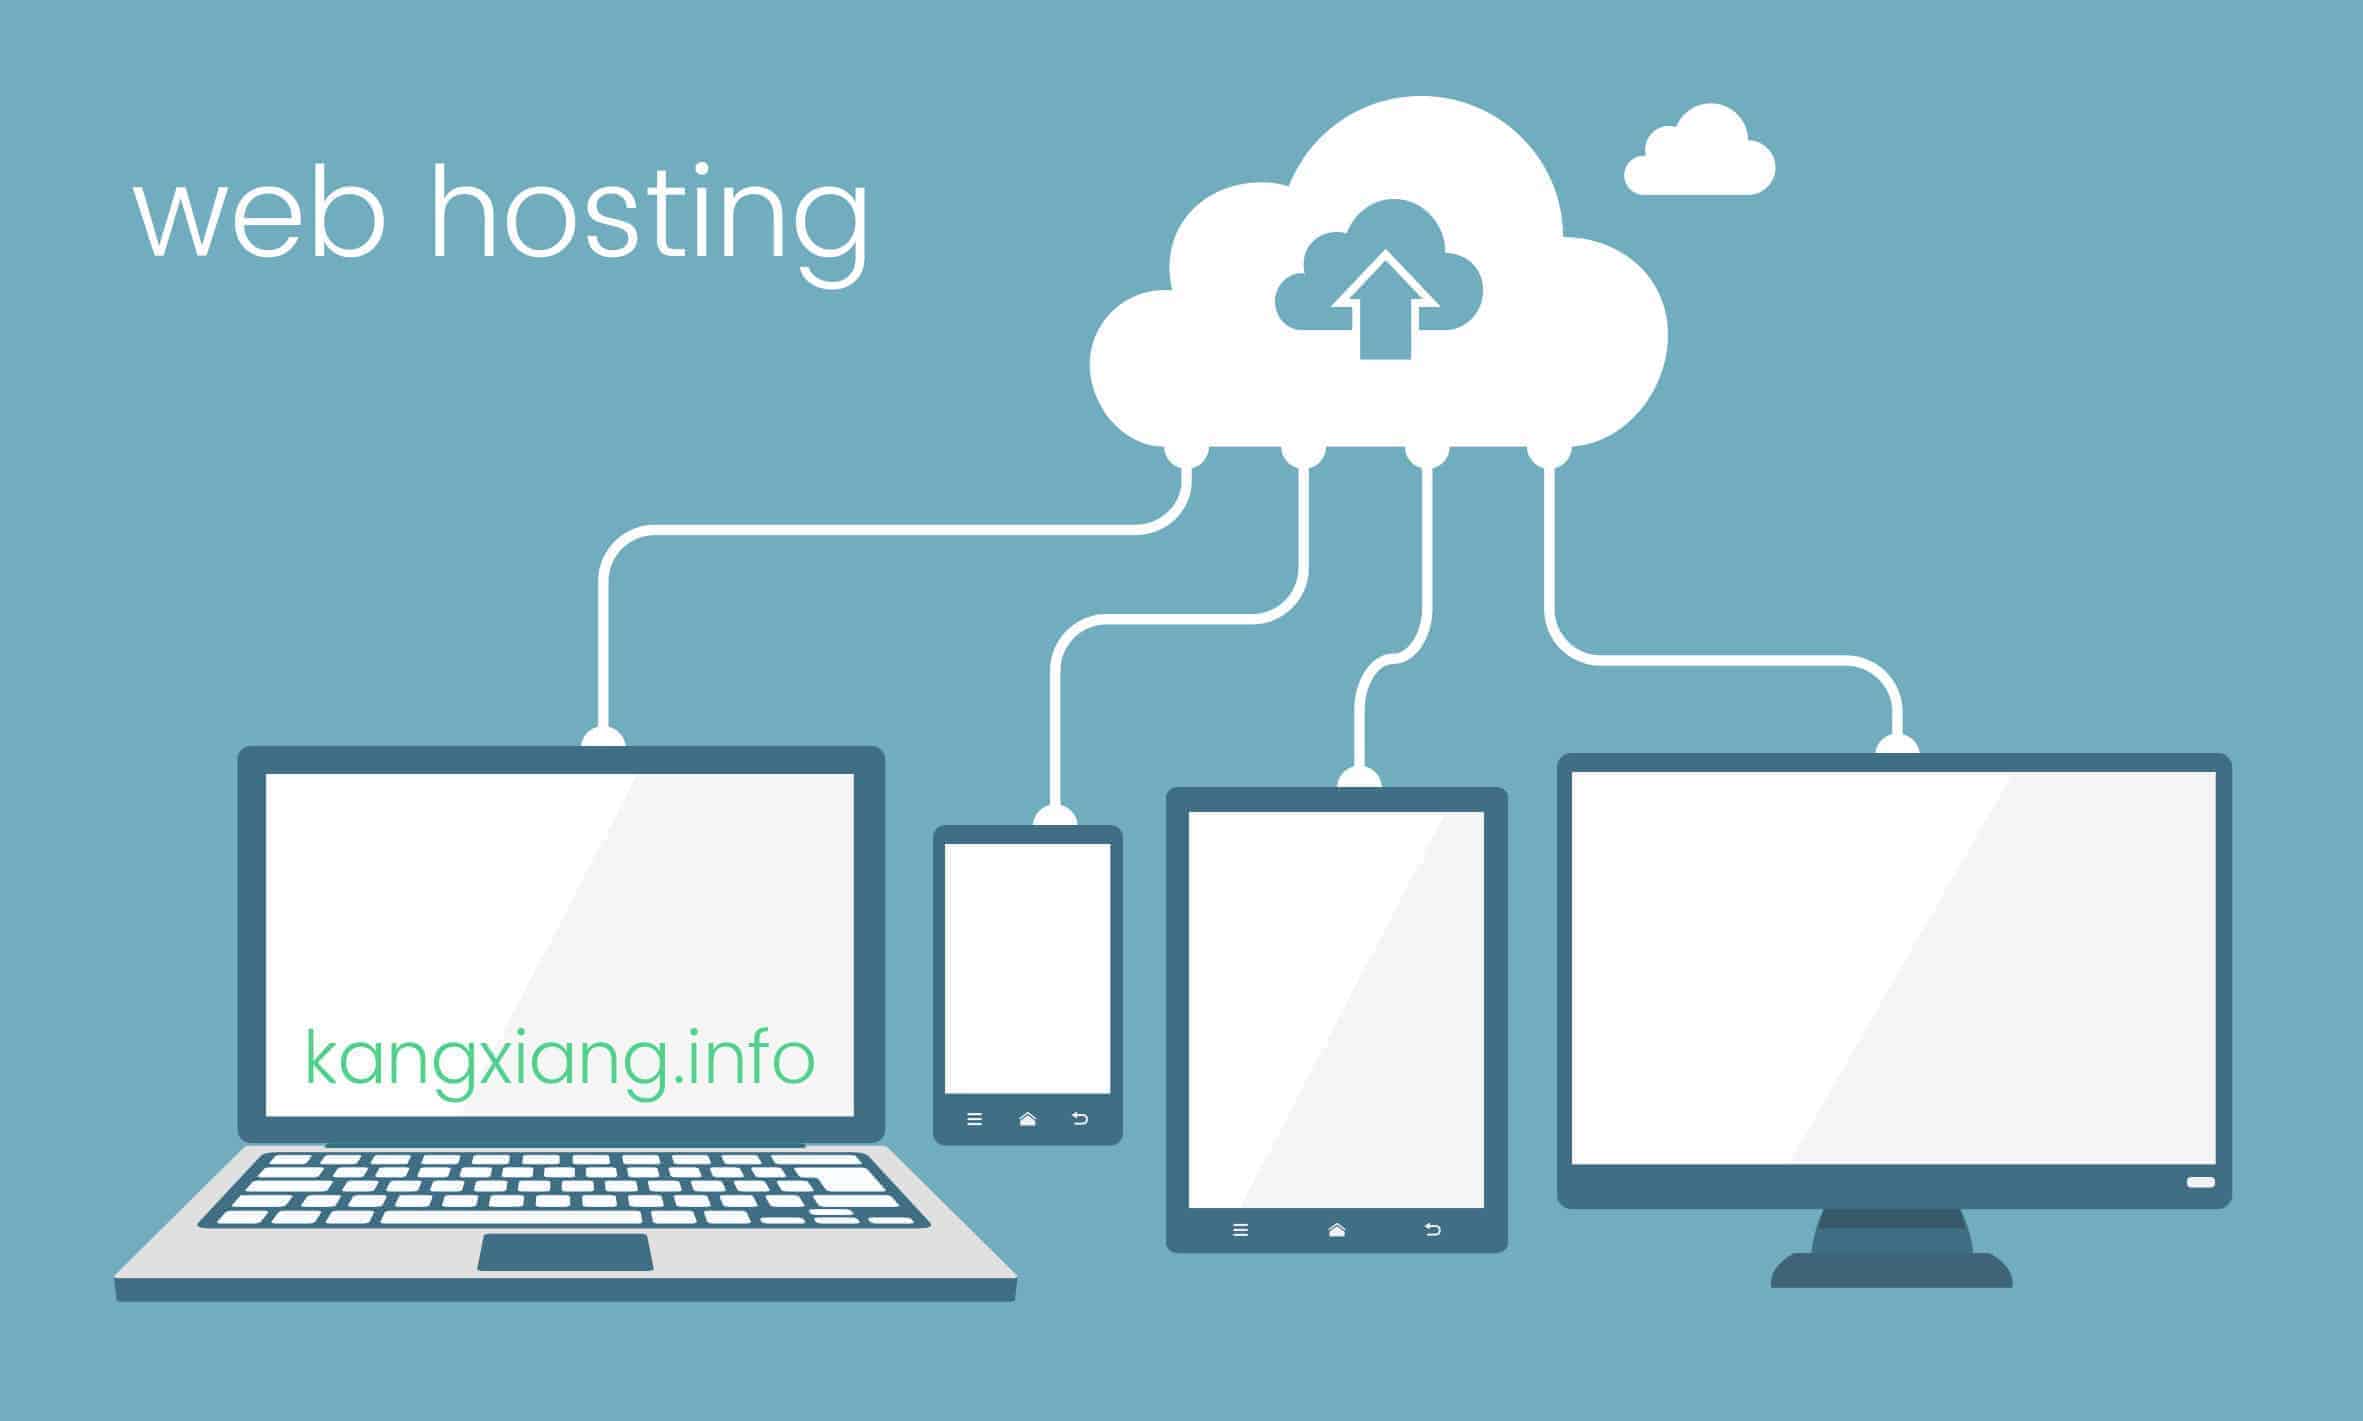 Choosing the right web hosting options